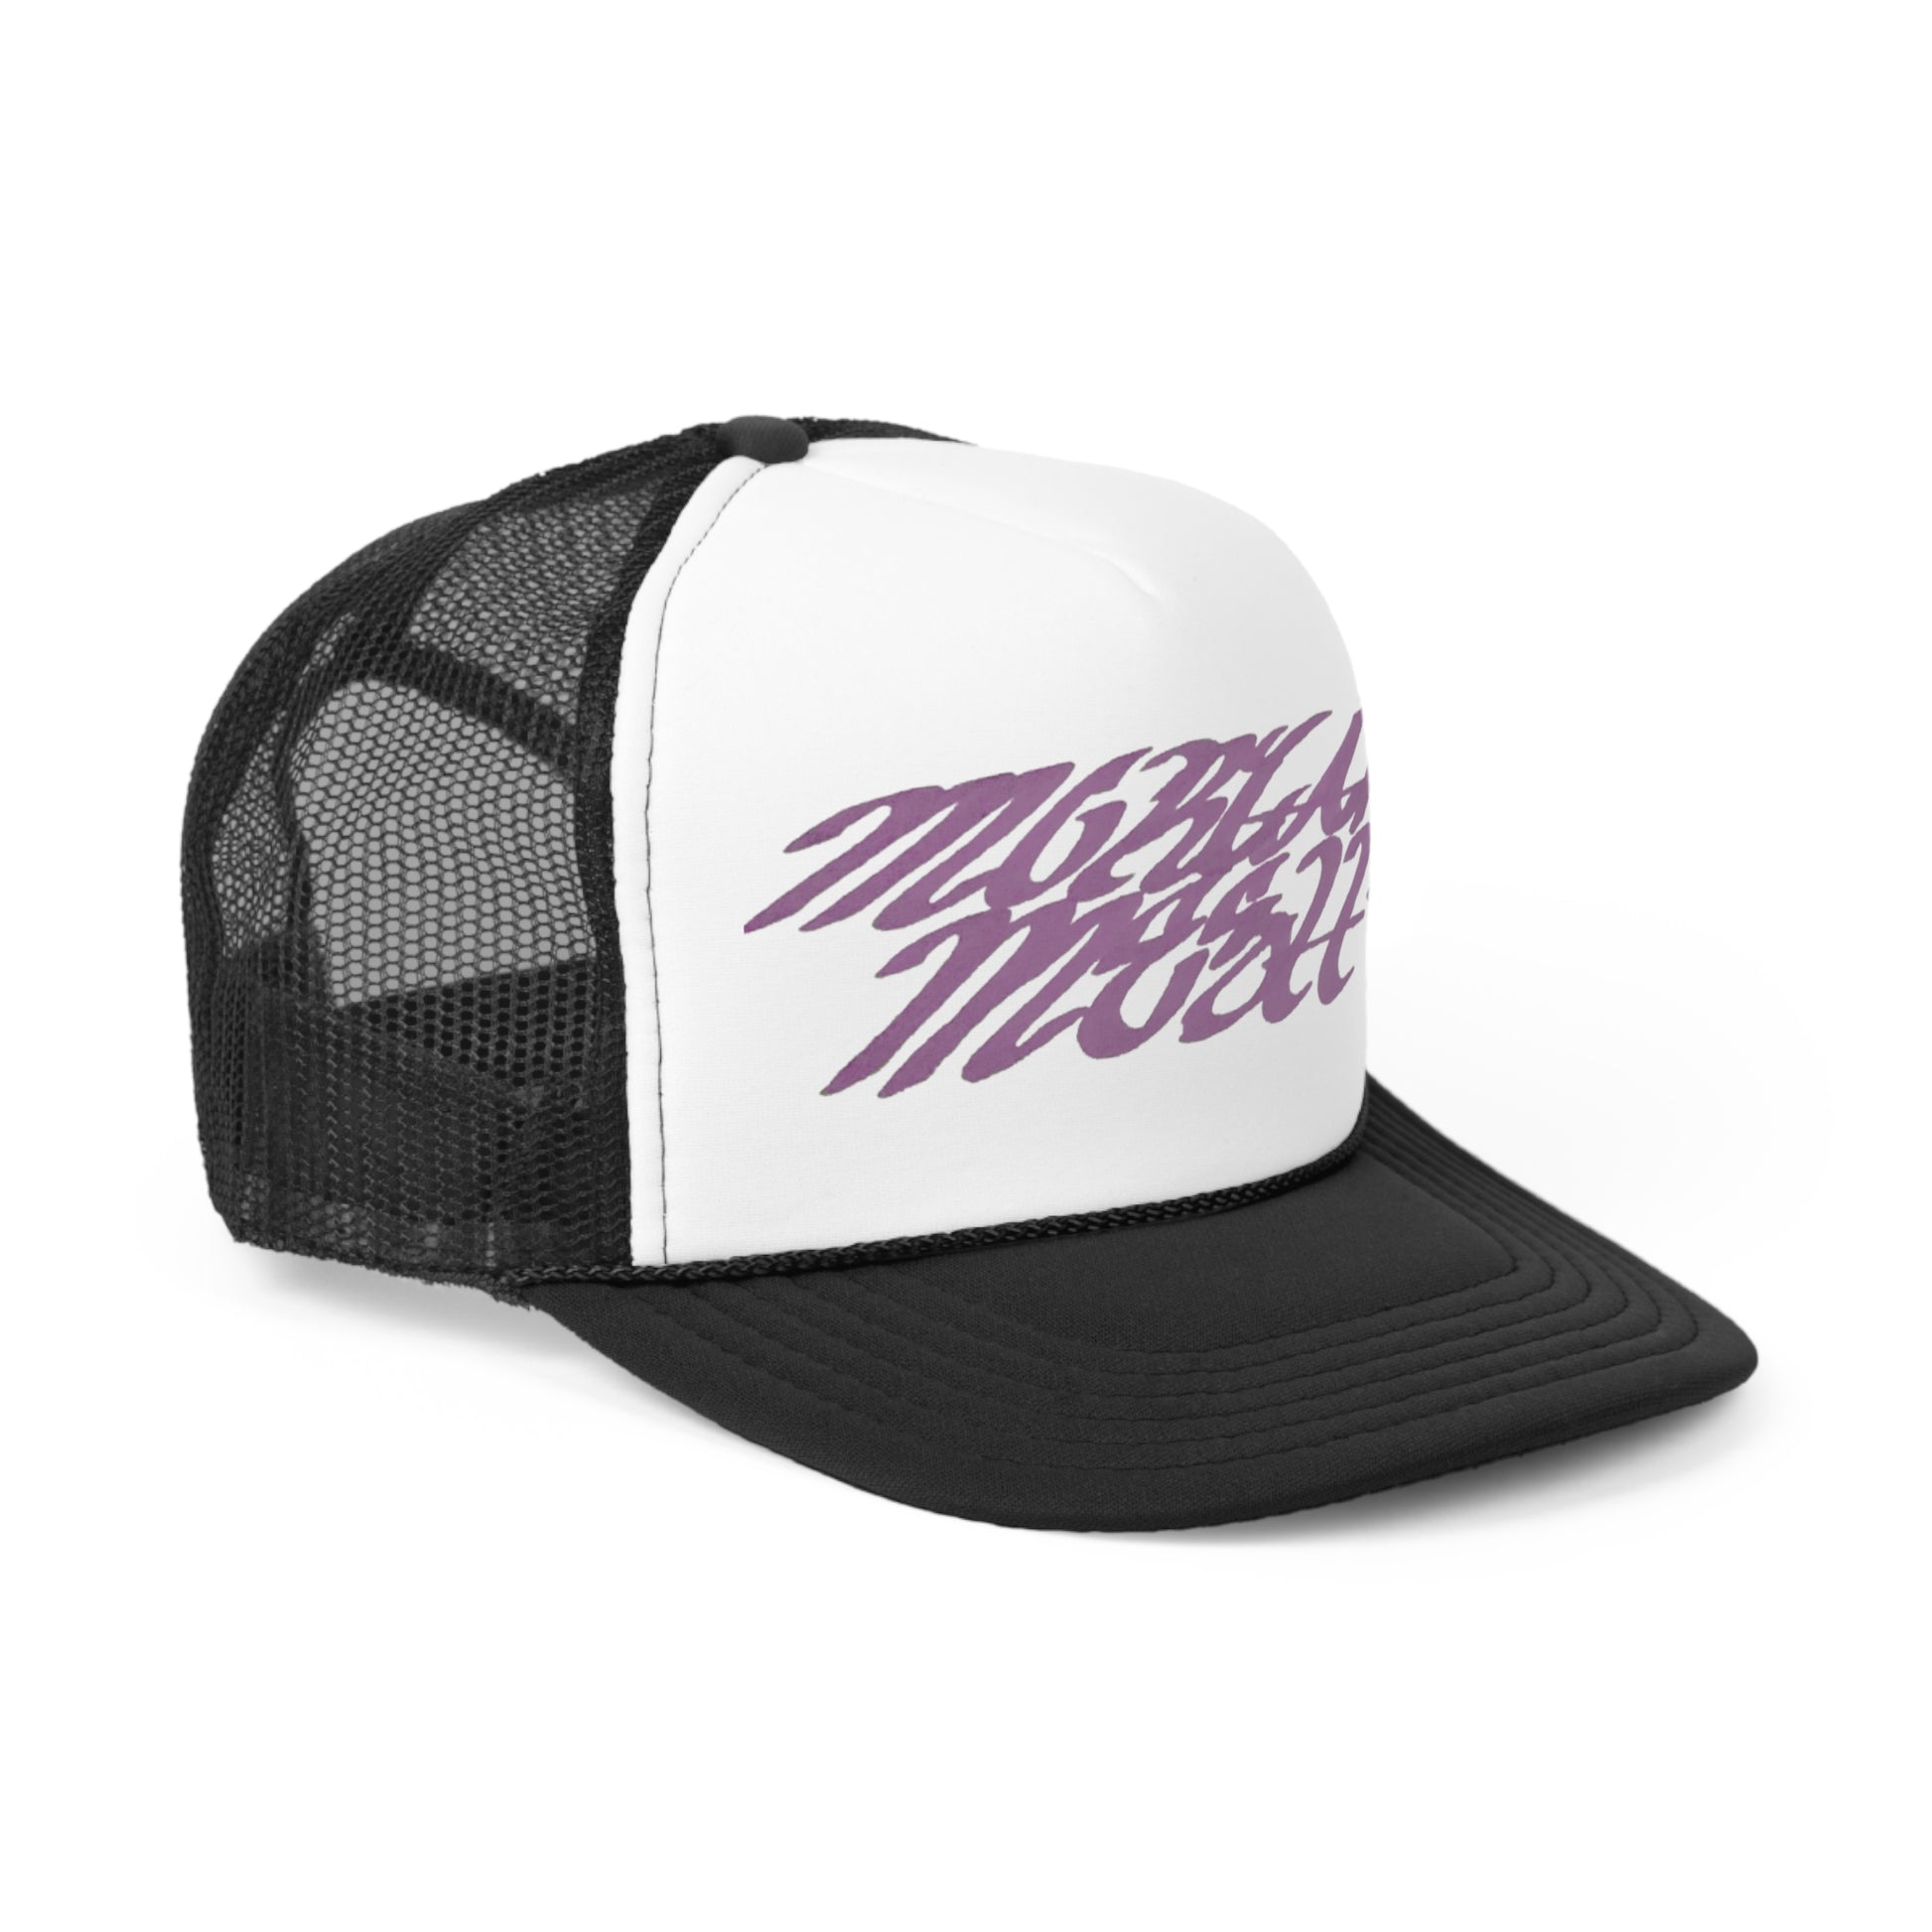 Wikjxiz Grasp All, Lose All Mesh Hat Trucker Hats Adjustable Baseball Cap  for Men Women Black Fishing Caps